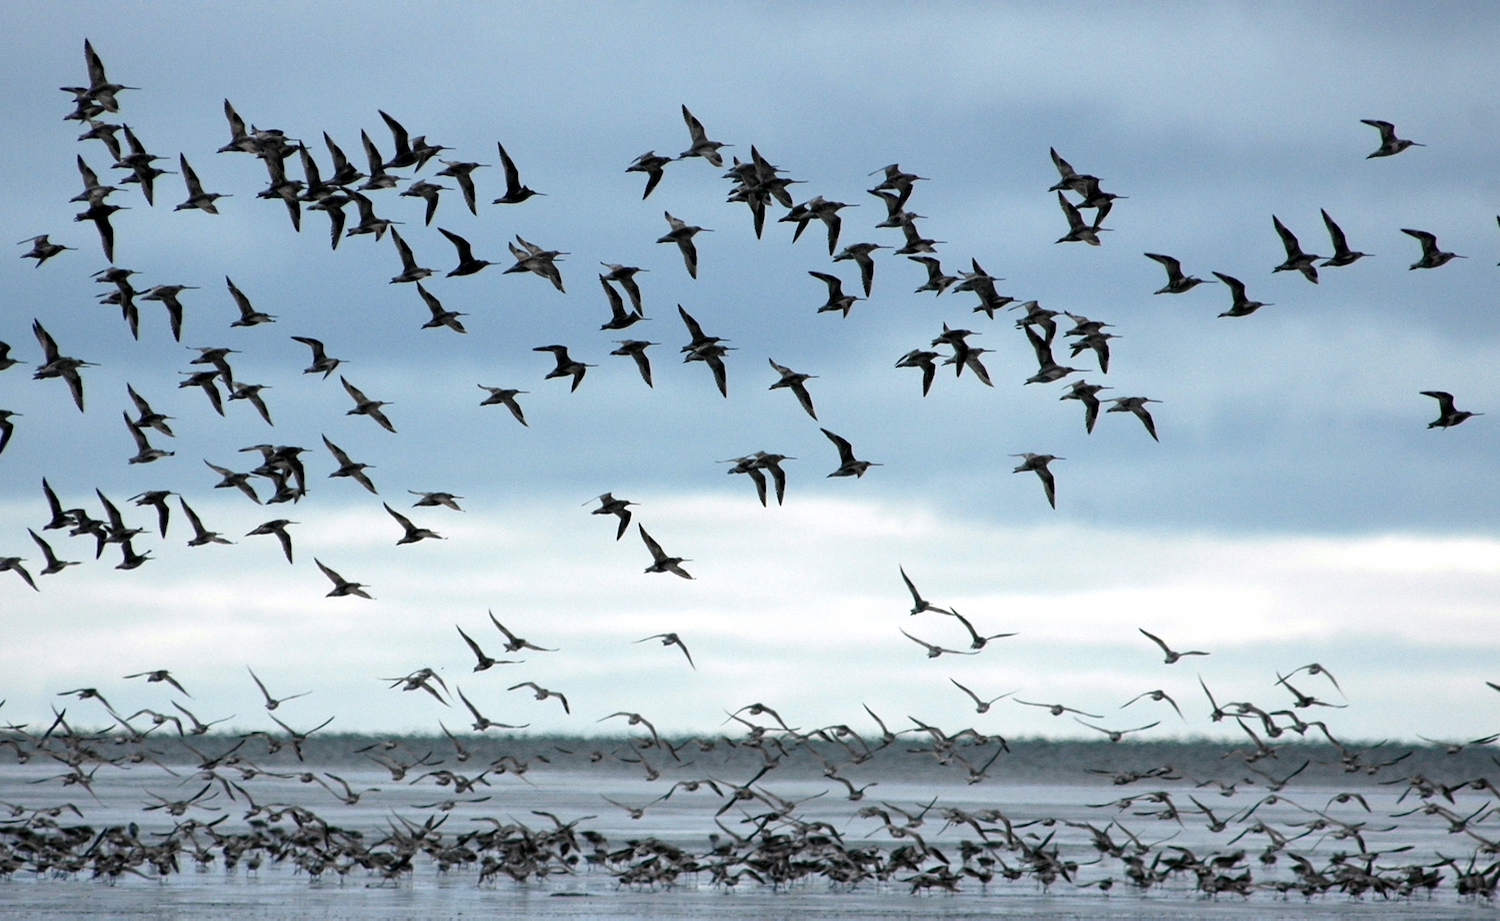 Dozens of birds fly above a sand shoal, where dozens more walk.